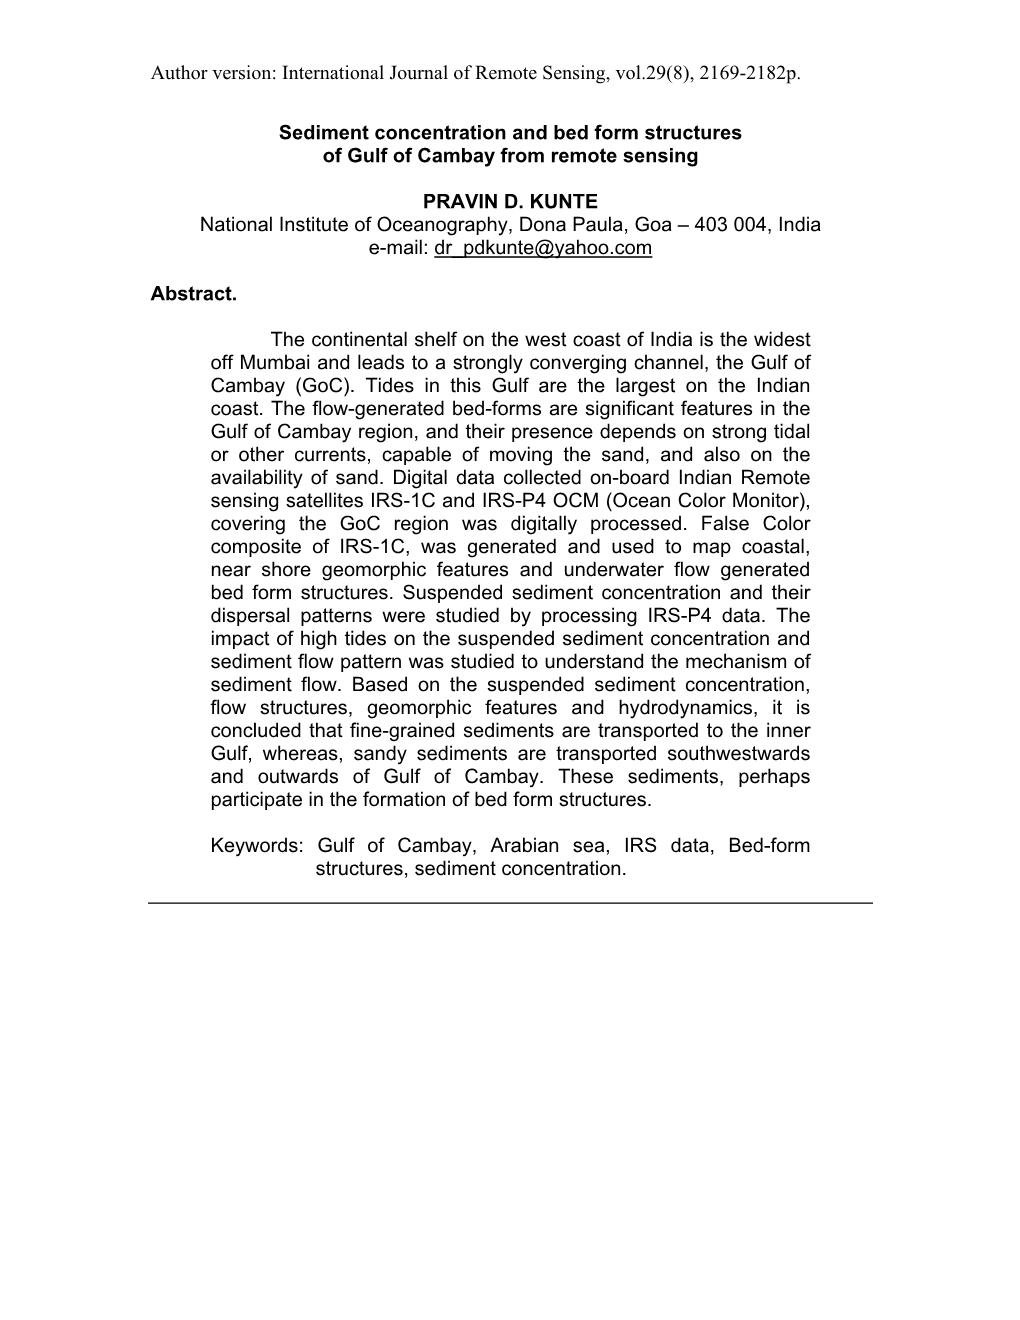 International Journal of Remote Sensing, Vol.29(8), 2169-2182P